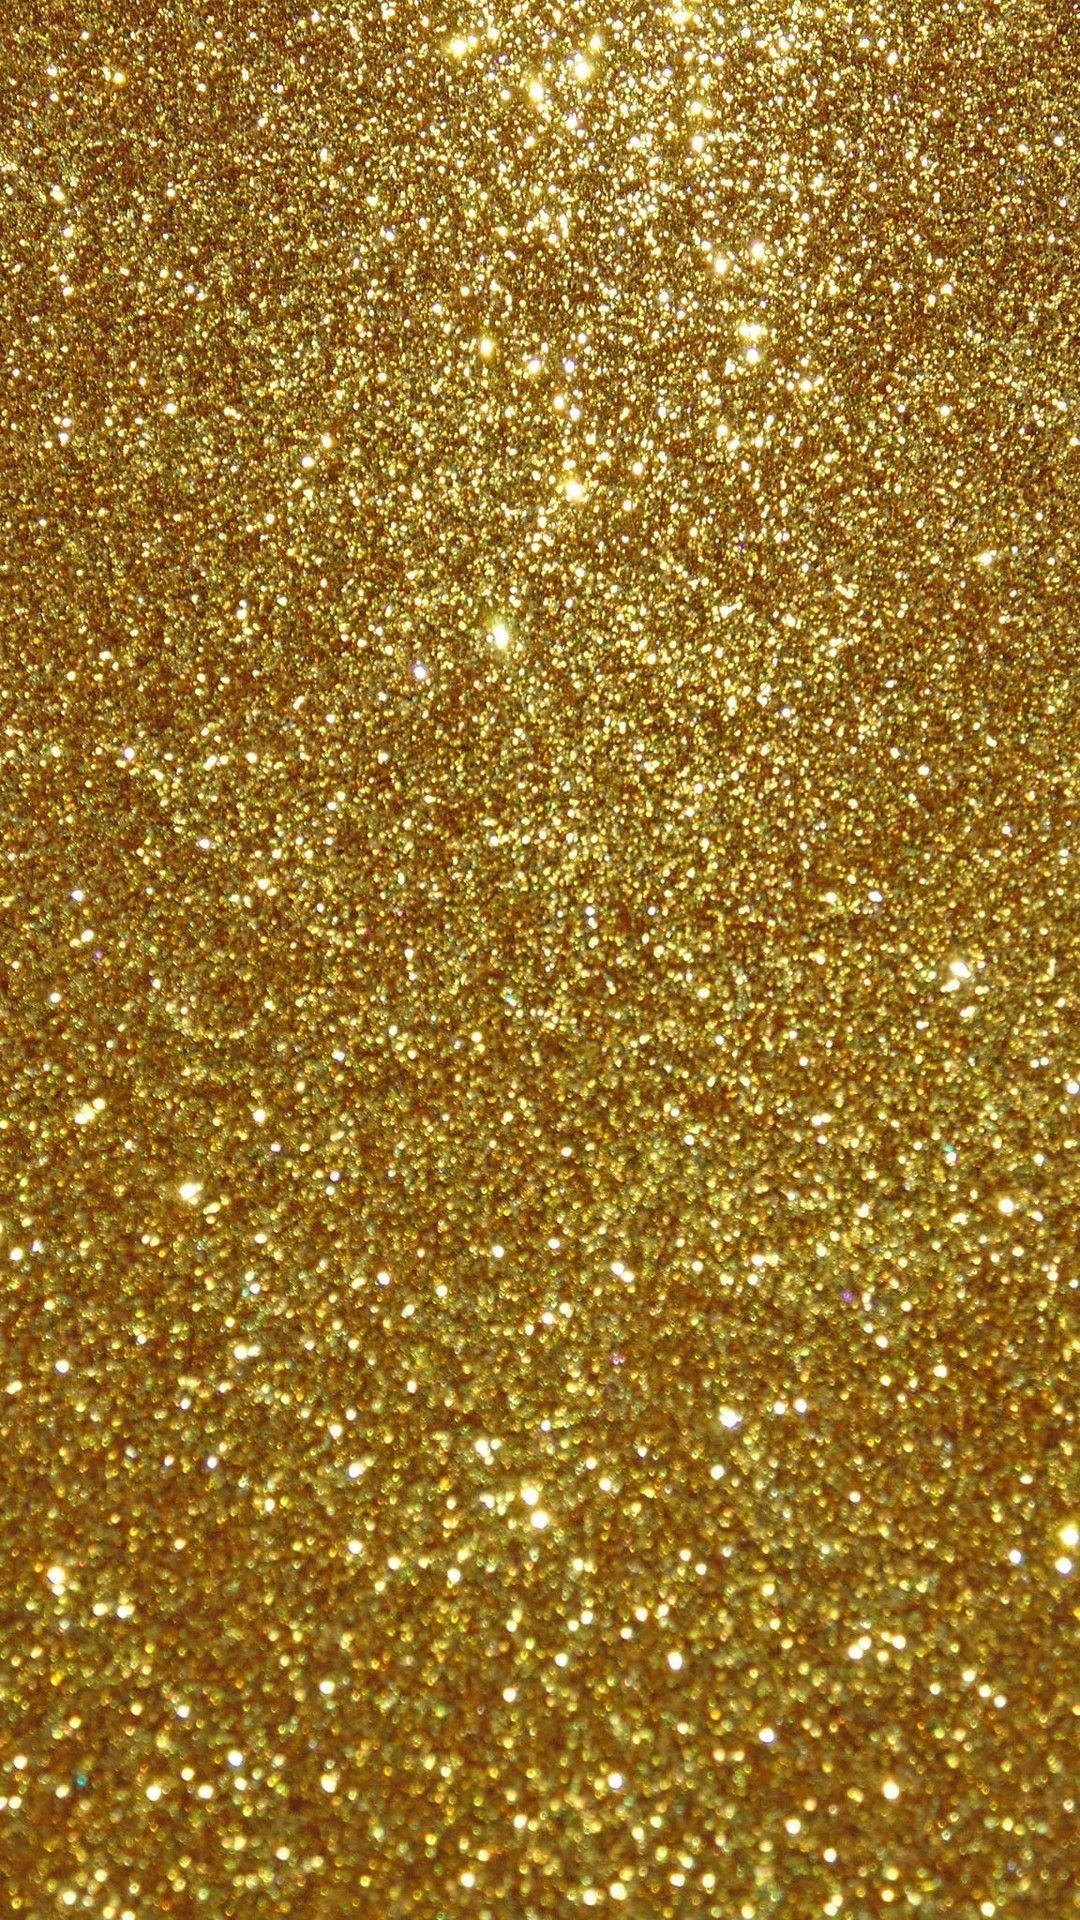 1080x Gold Glitter Wallpaper For iPhone Glitter